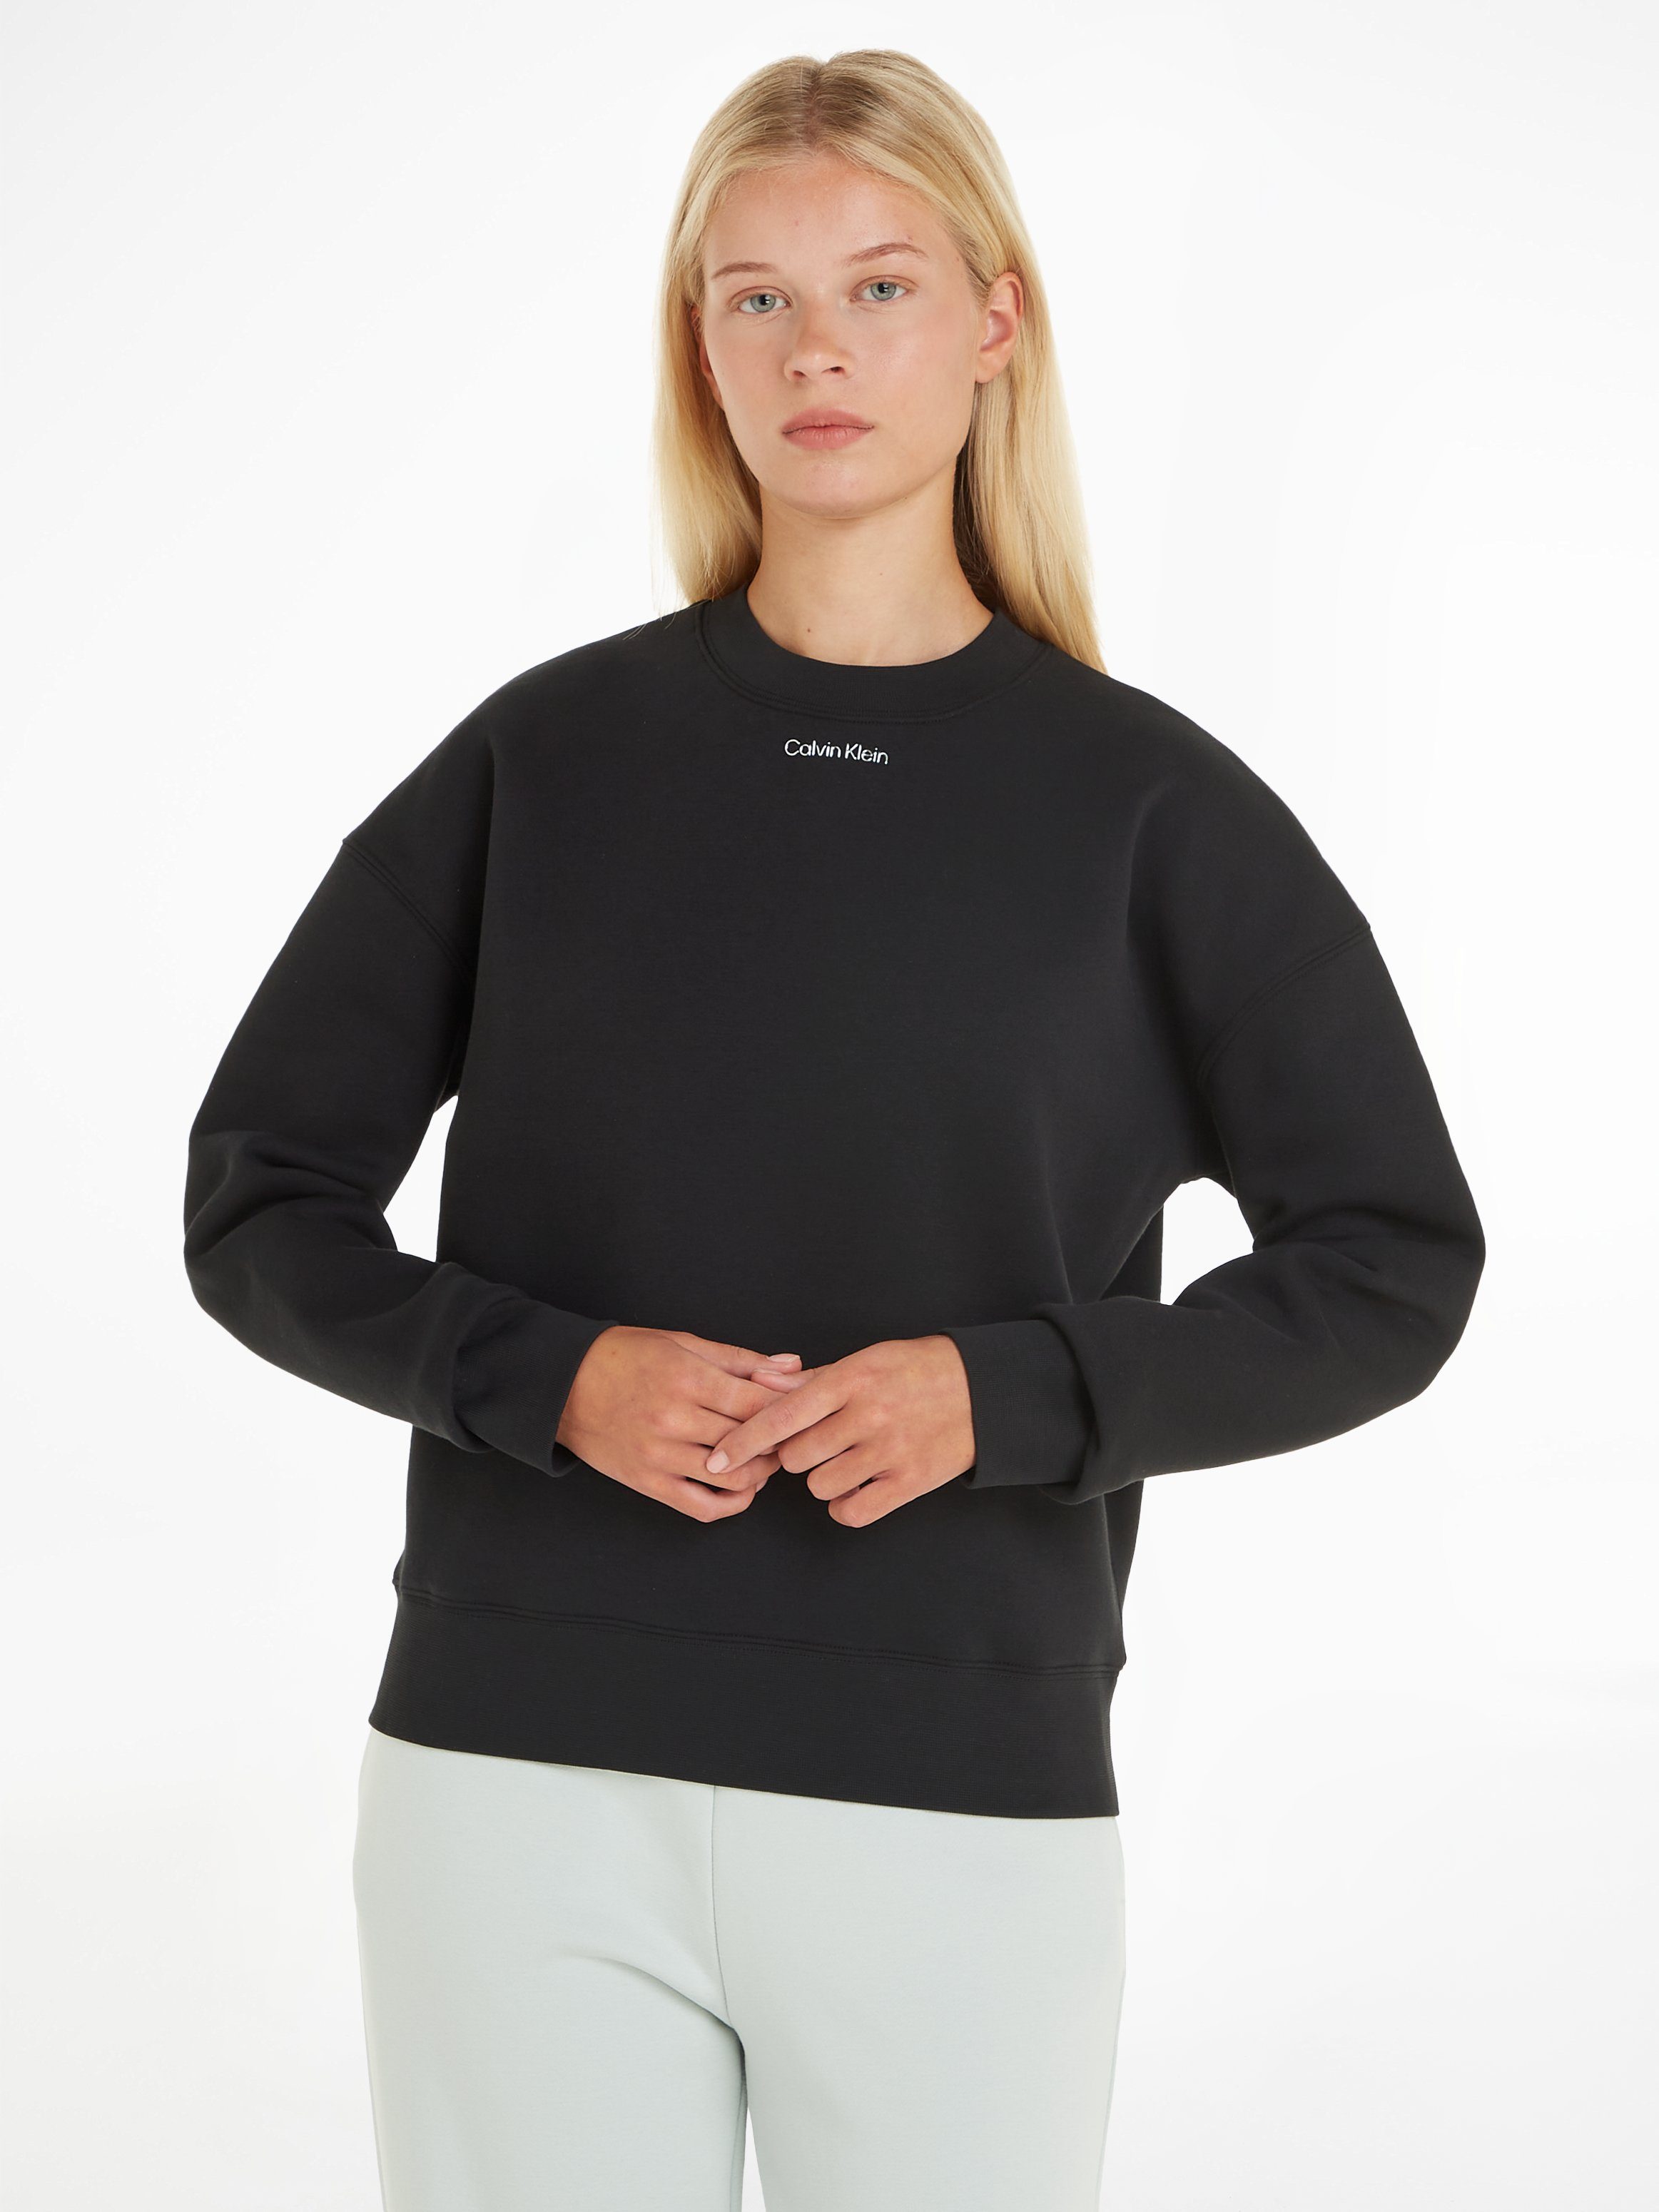 MICRO METALLIC LOGO Calvin Klein SWEATSHIRT Sweatshirt